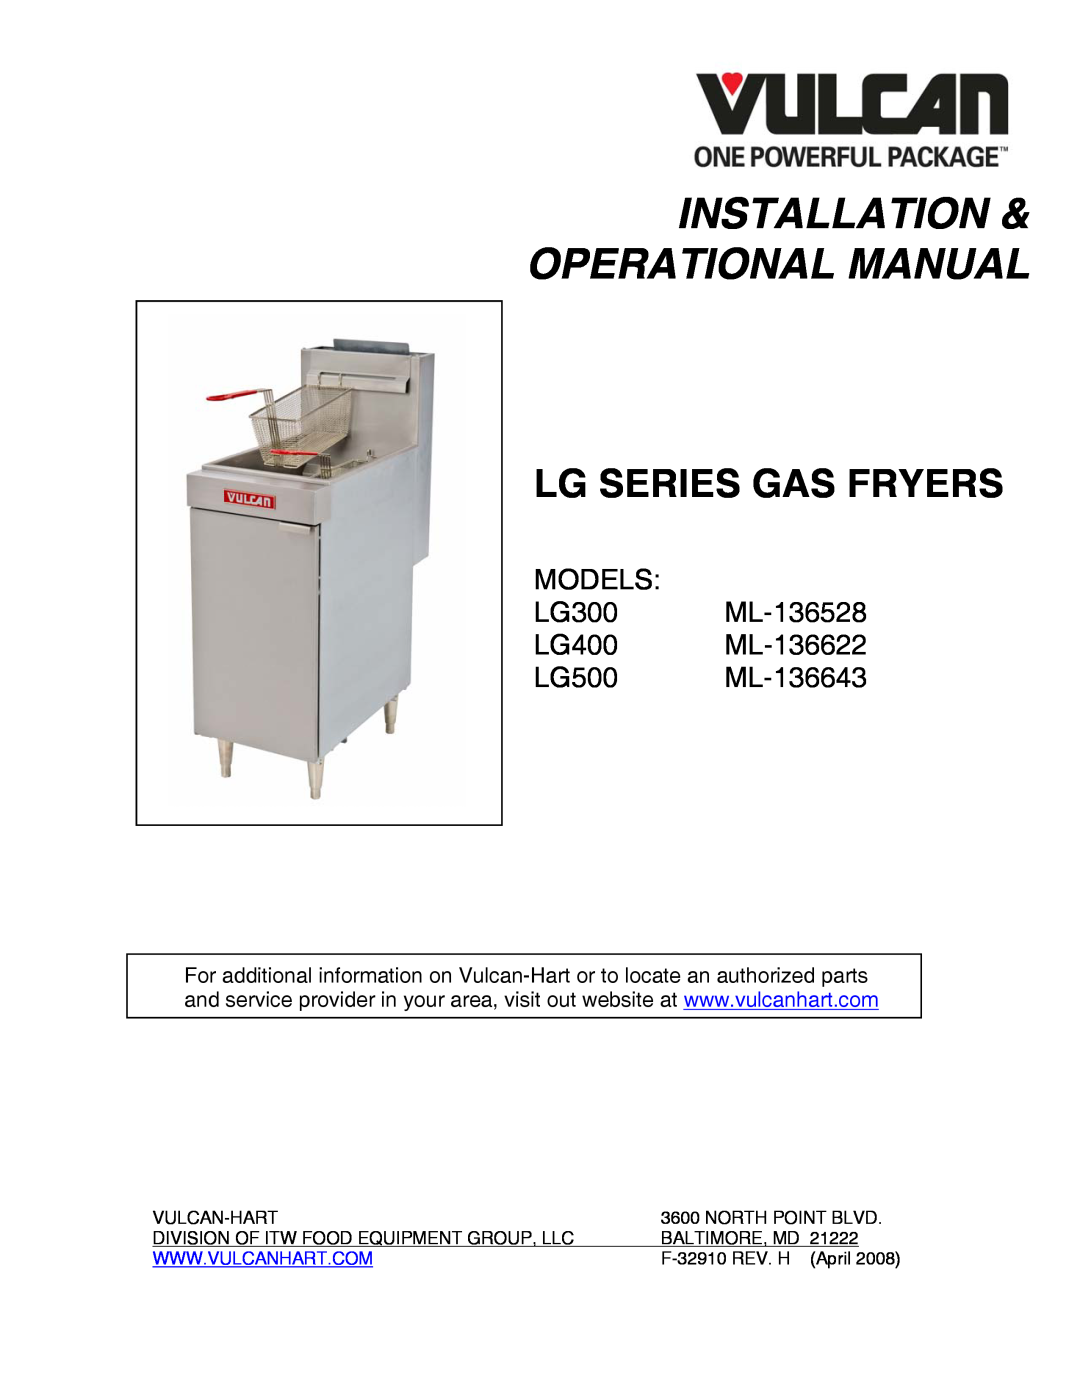 Vulcan-Hart LG300, LG500, LG400 manual Installation Operational Manual, Lg Series Gas Fryers 